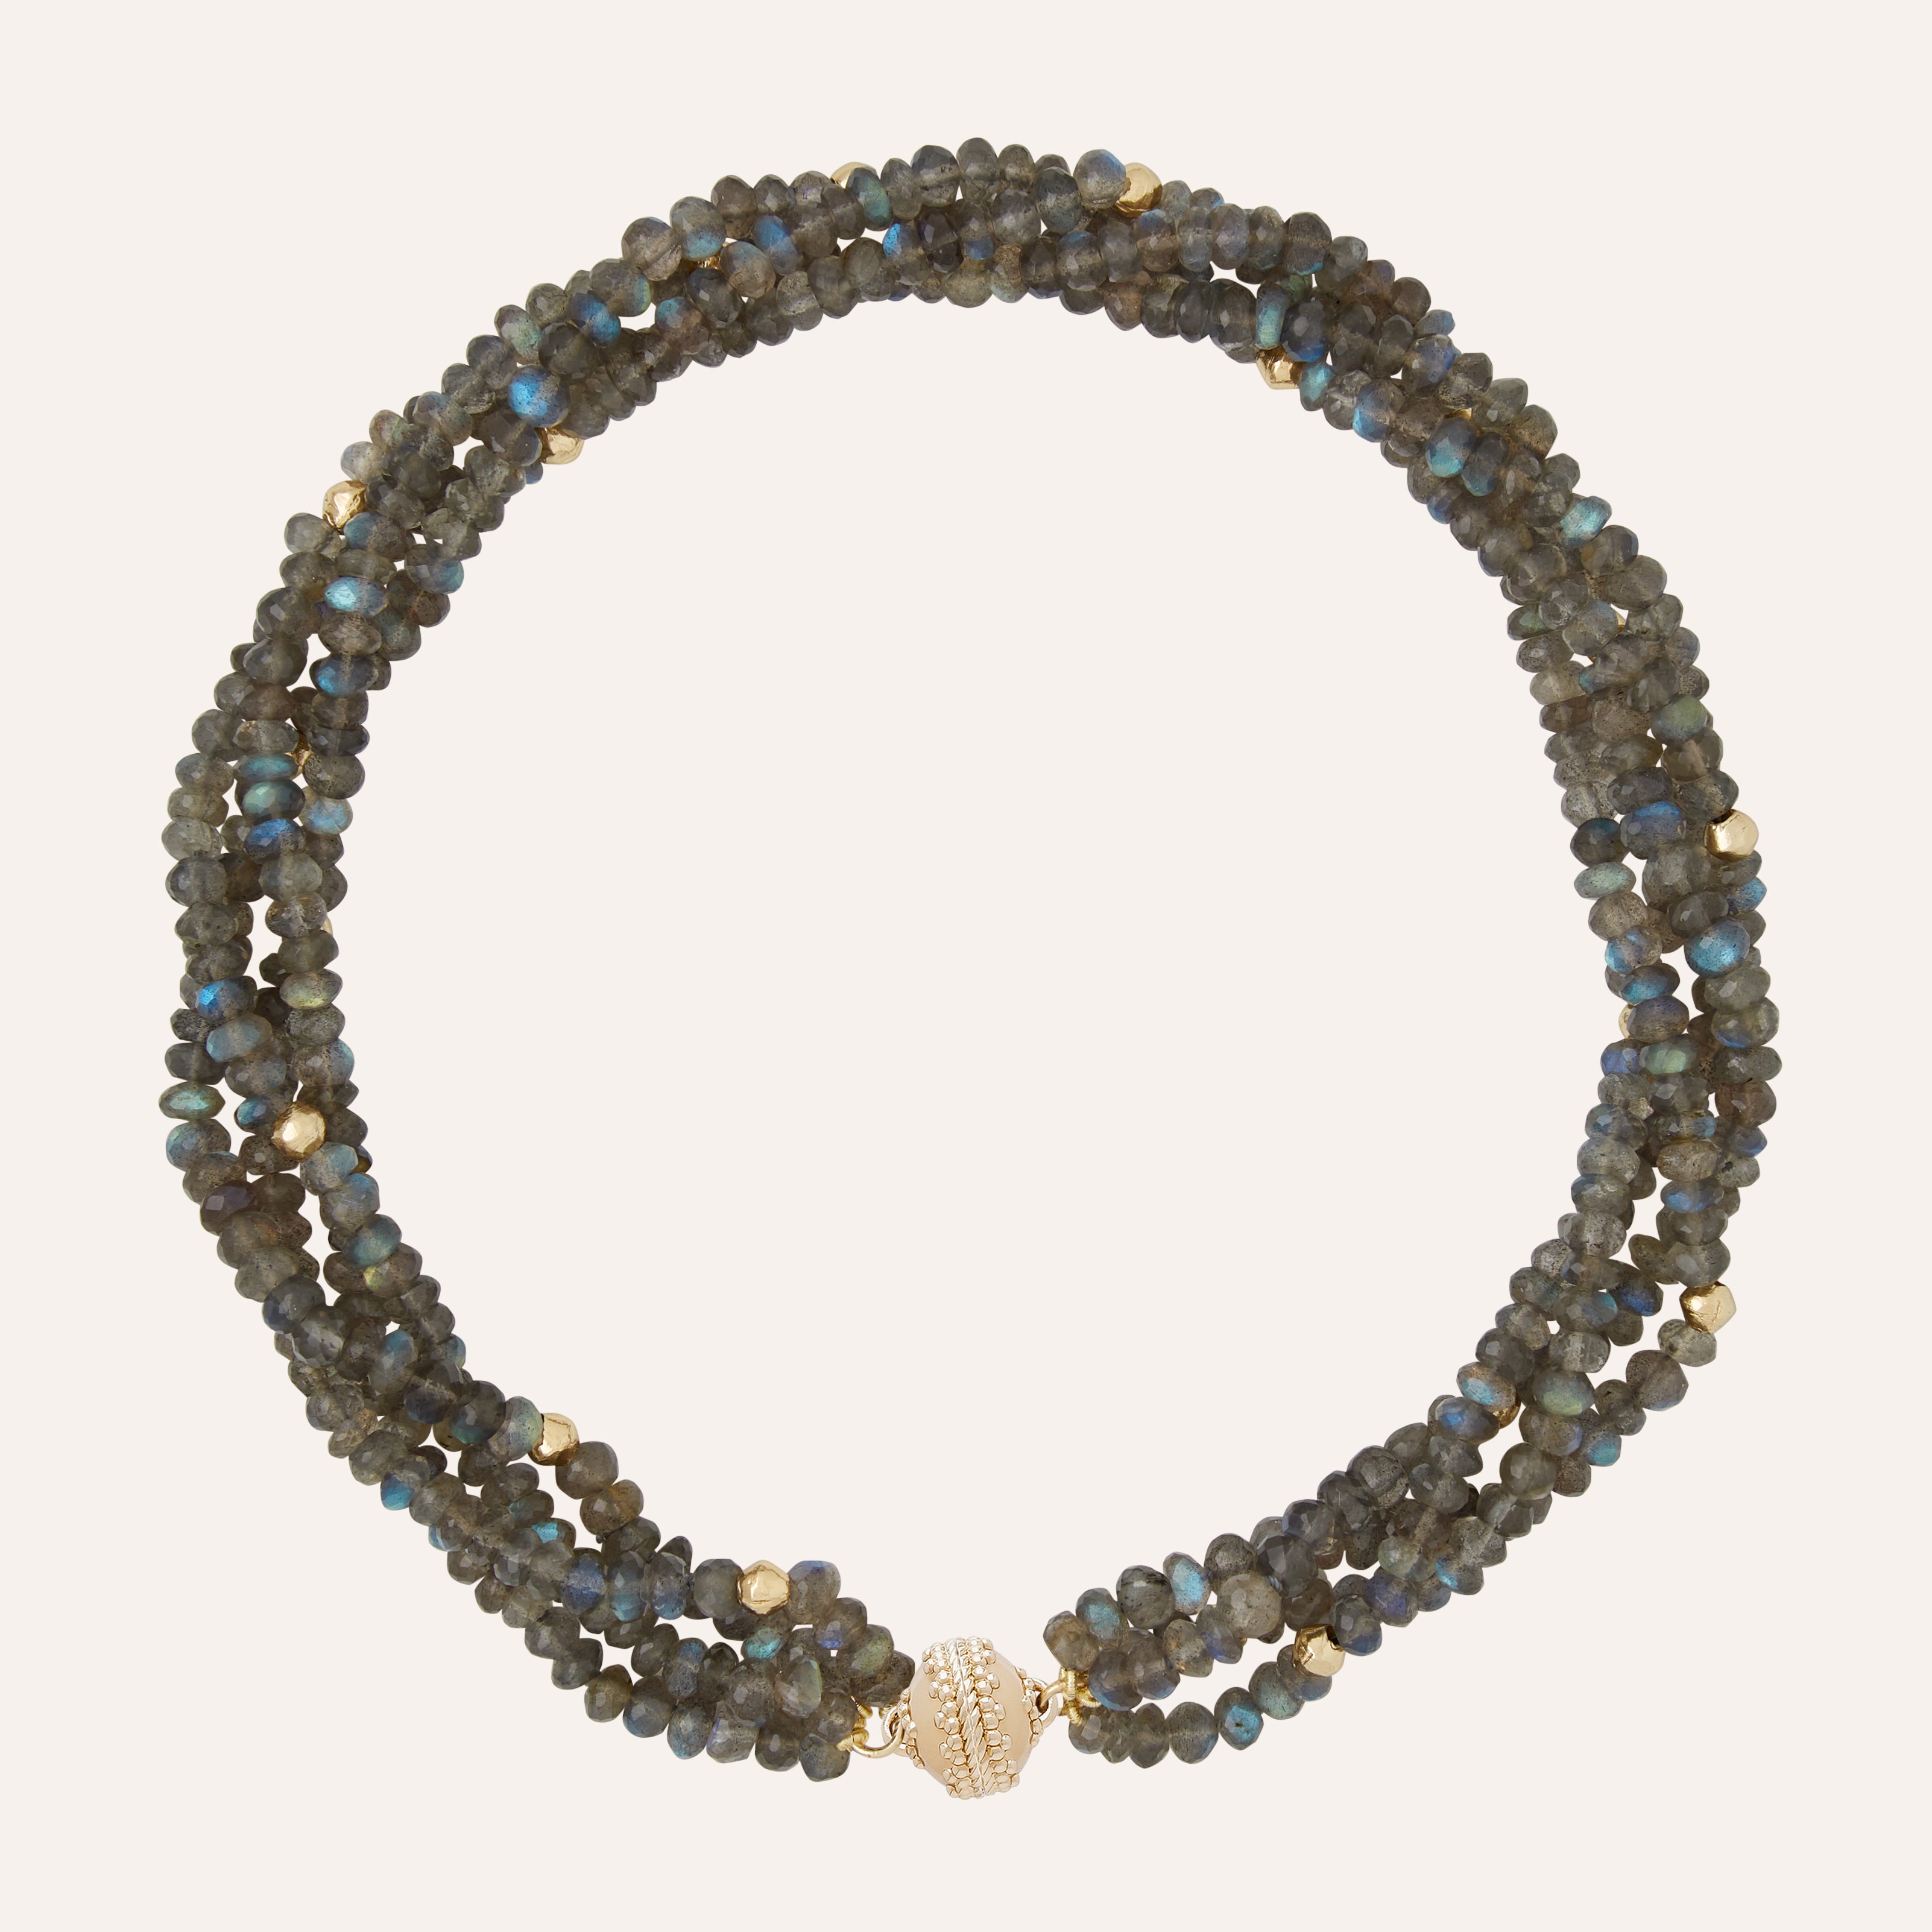 Peppercorn Labradorite Faceted Rondelle Multi-Strand Necklace